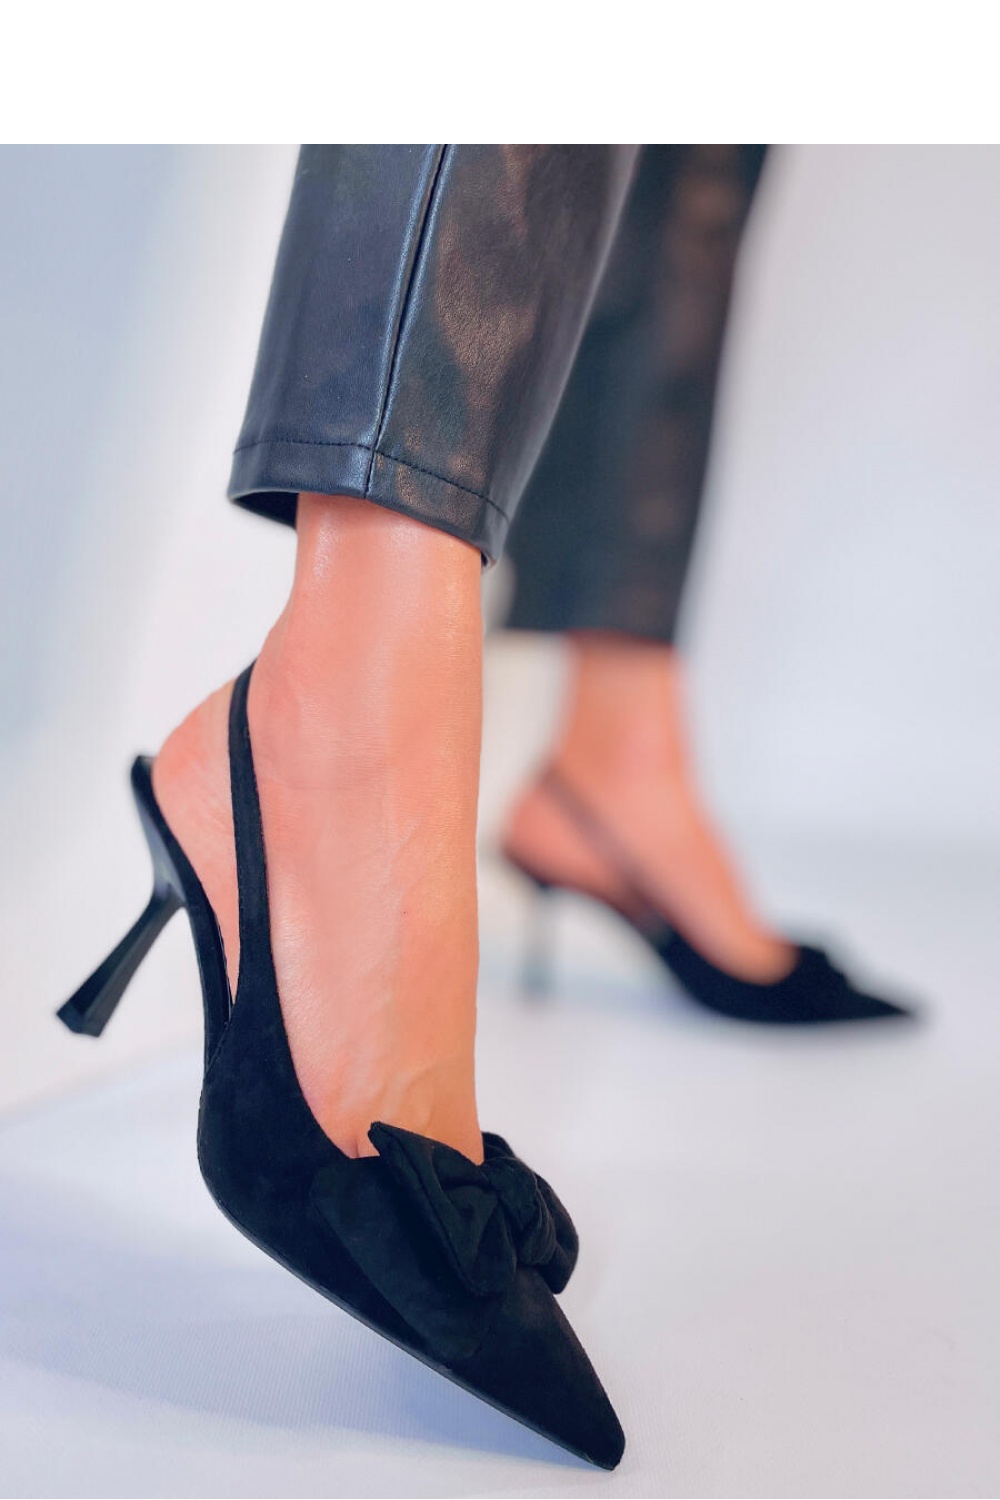 High heels model 178771 Inello black Ladies